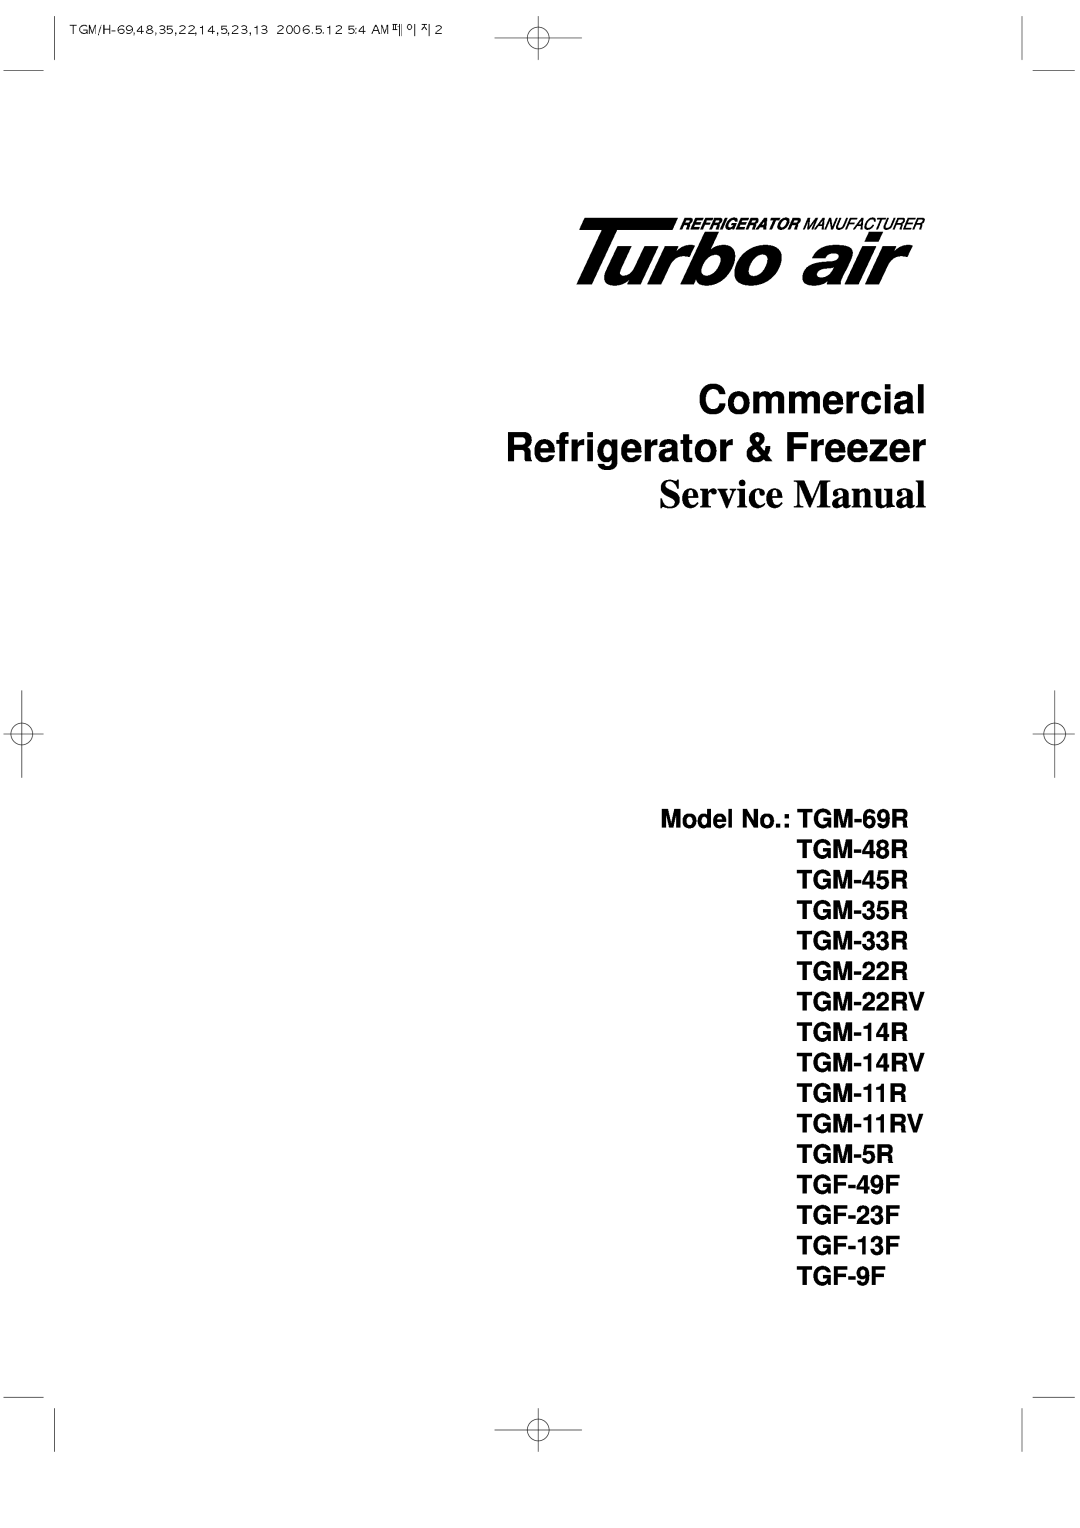 Turbo Air TGM-22R, TGM-5R, TGM-48R, TGM-11RV, TGM-14R, TGM-69R Commercial Refrigerator & Freezer, Service Manual, TGF-9F 